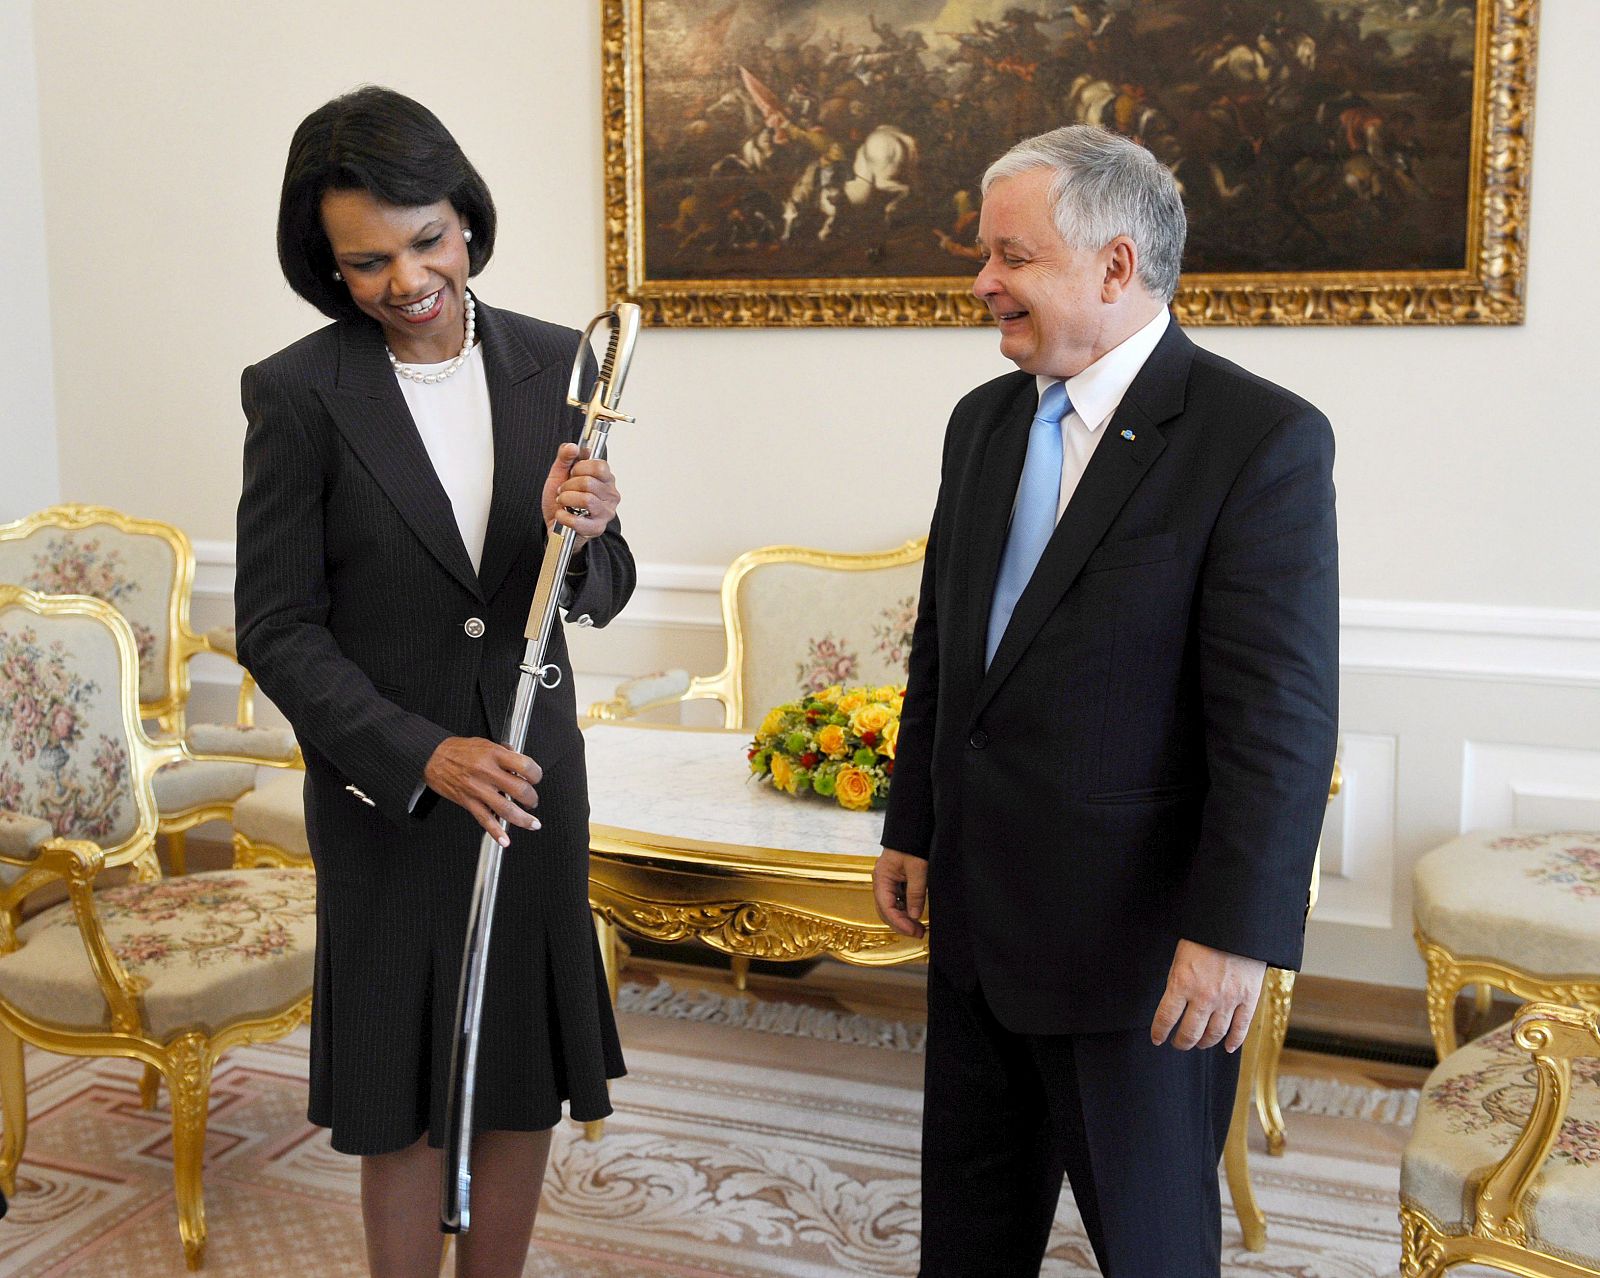 El presidente polaco, Lech Kaczynski, le da a Condoleezza Rice un sable del ejército polaco de regalo antes de firmar un acuerdo sobre el escudo antimisiles estadounidense en el país.